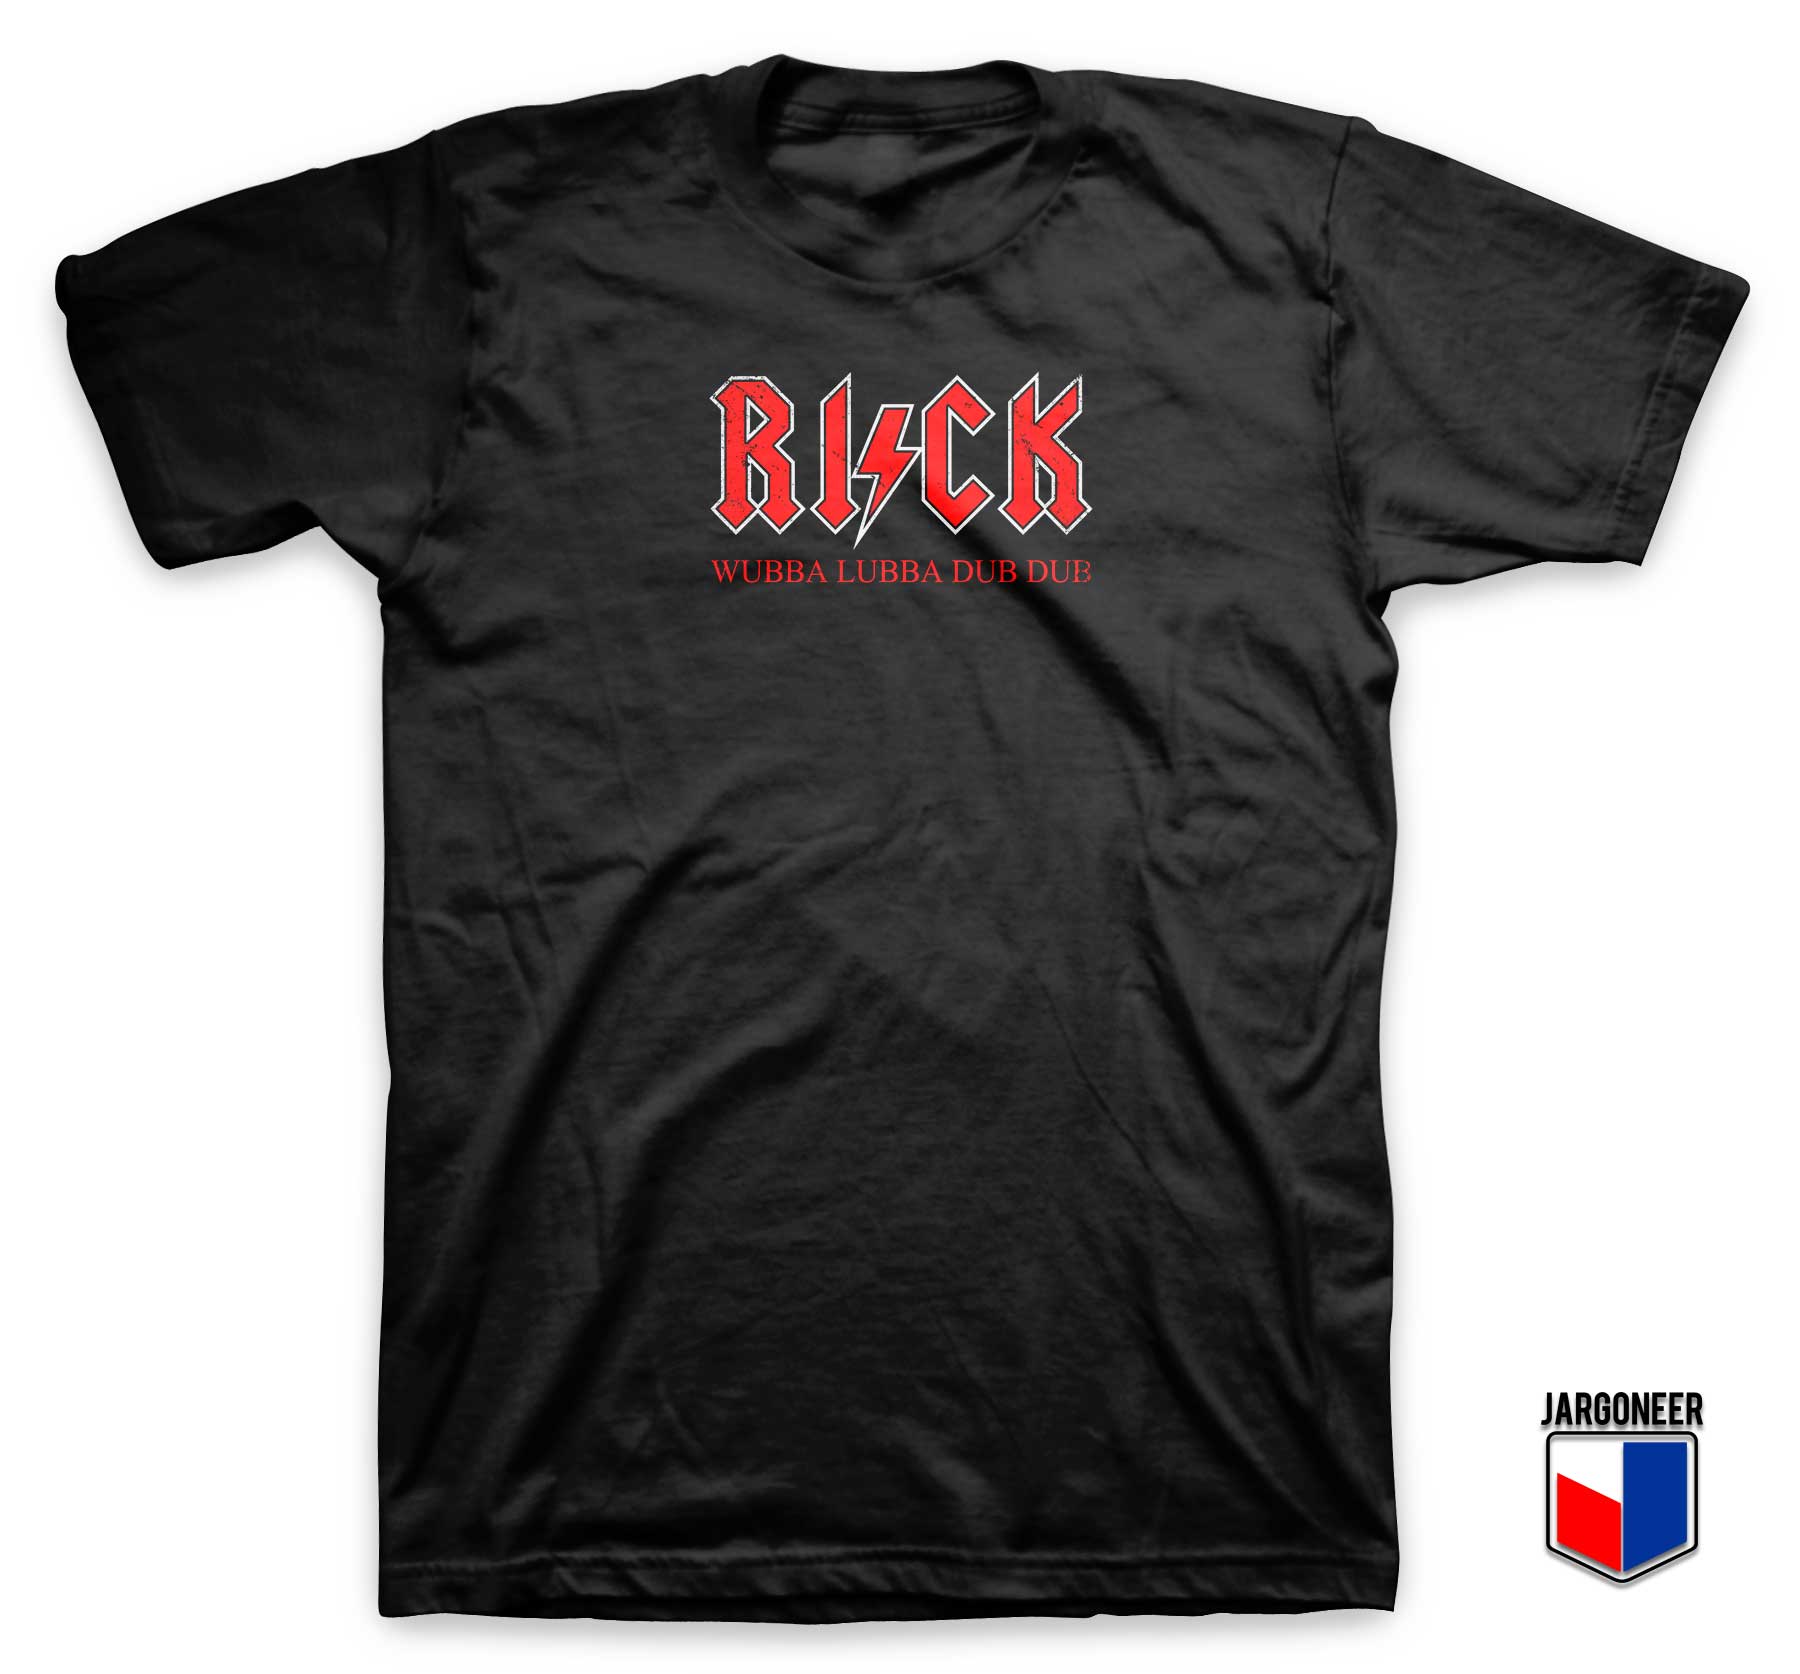 Wubba Lubba Dub Dub Rock T Shirt - Shop Unique Graphic Cool Shirt Designs